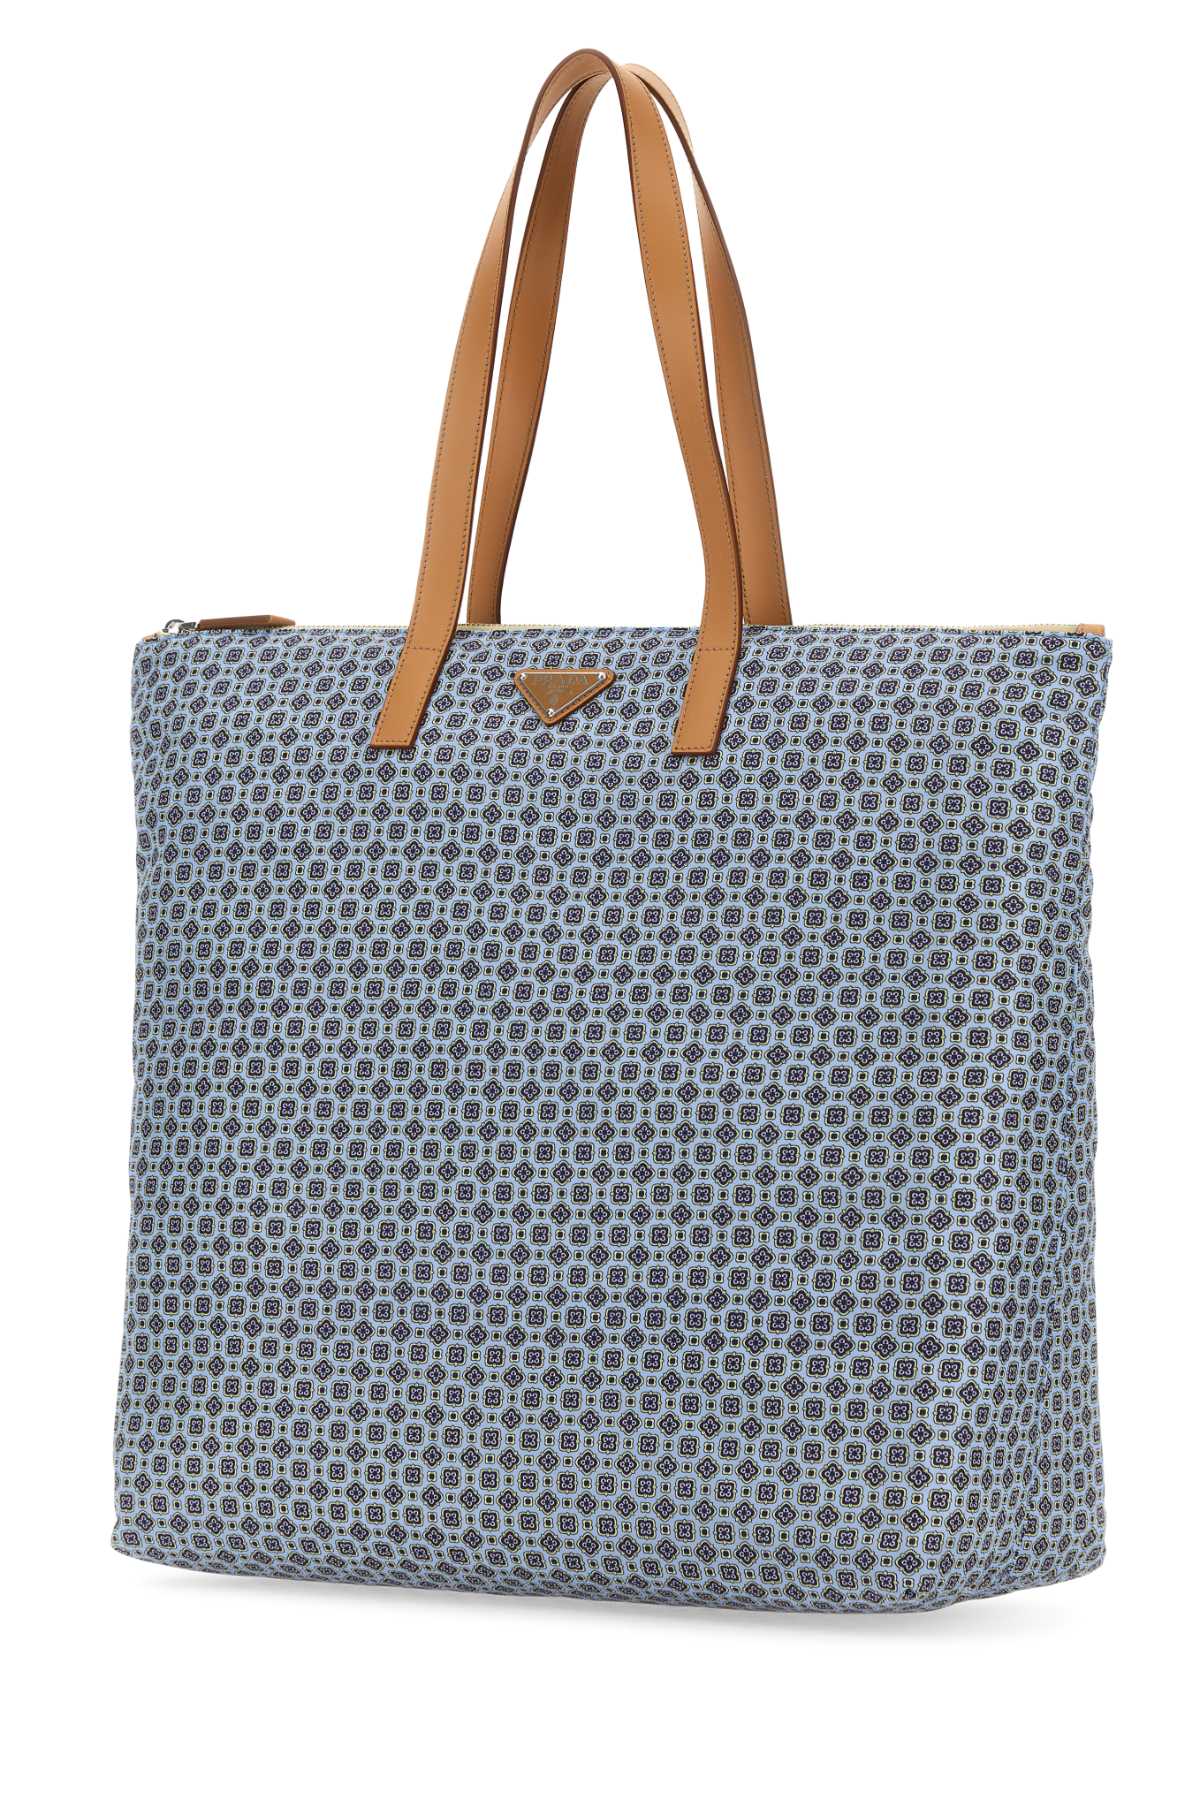 Prada Printed Re-nylon Shopping Bag In Astralenatural